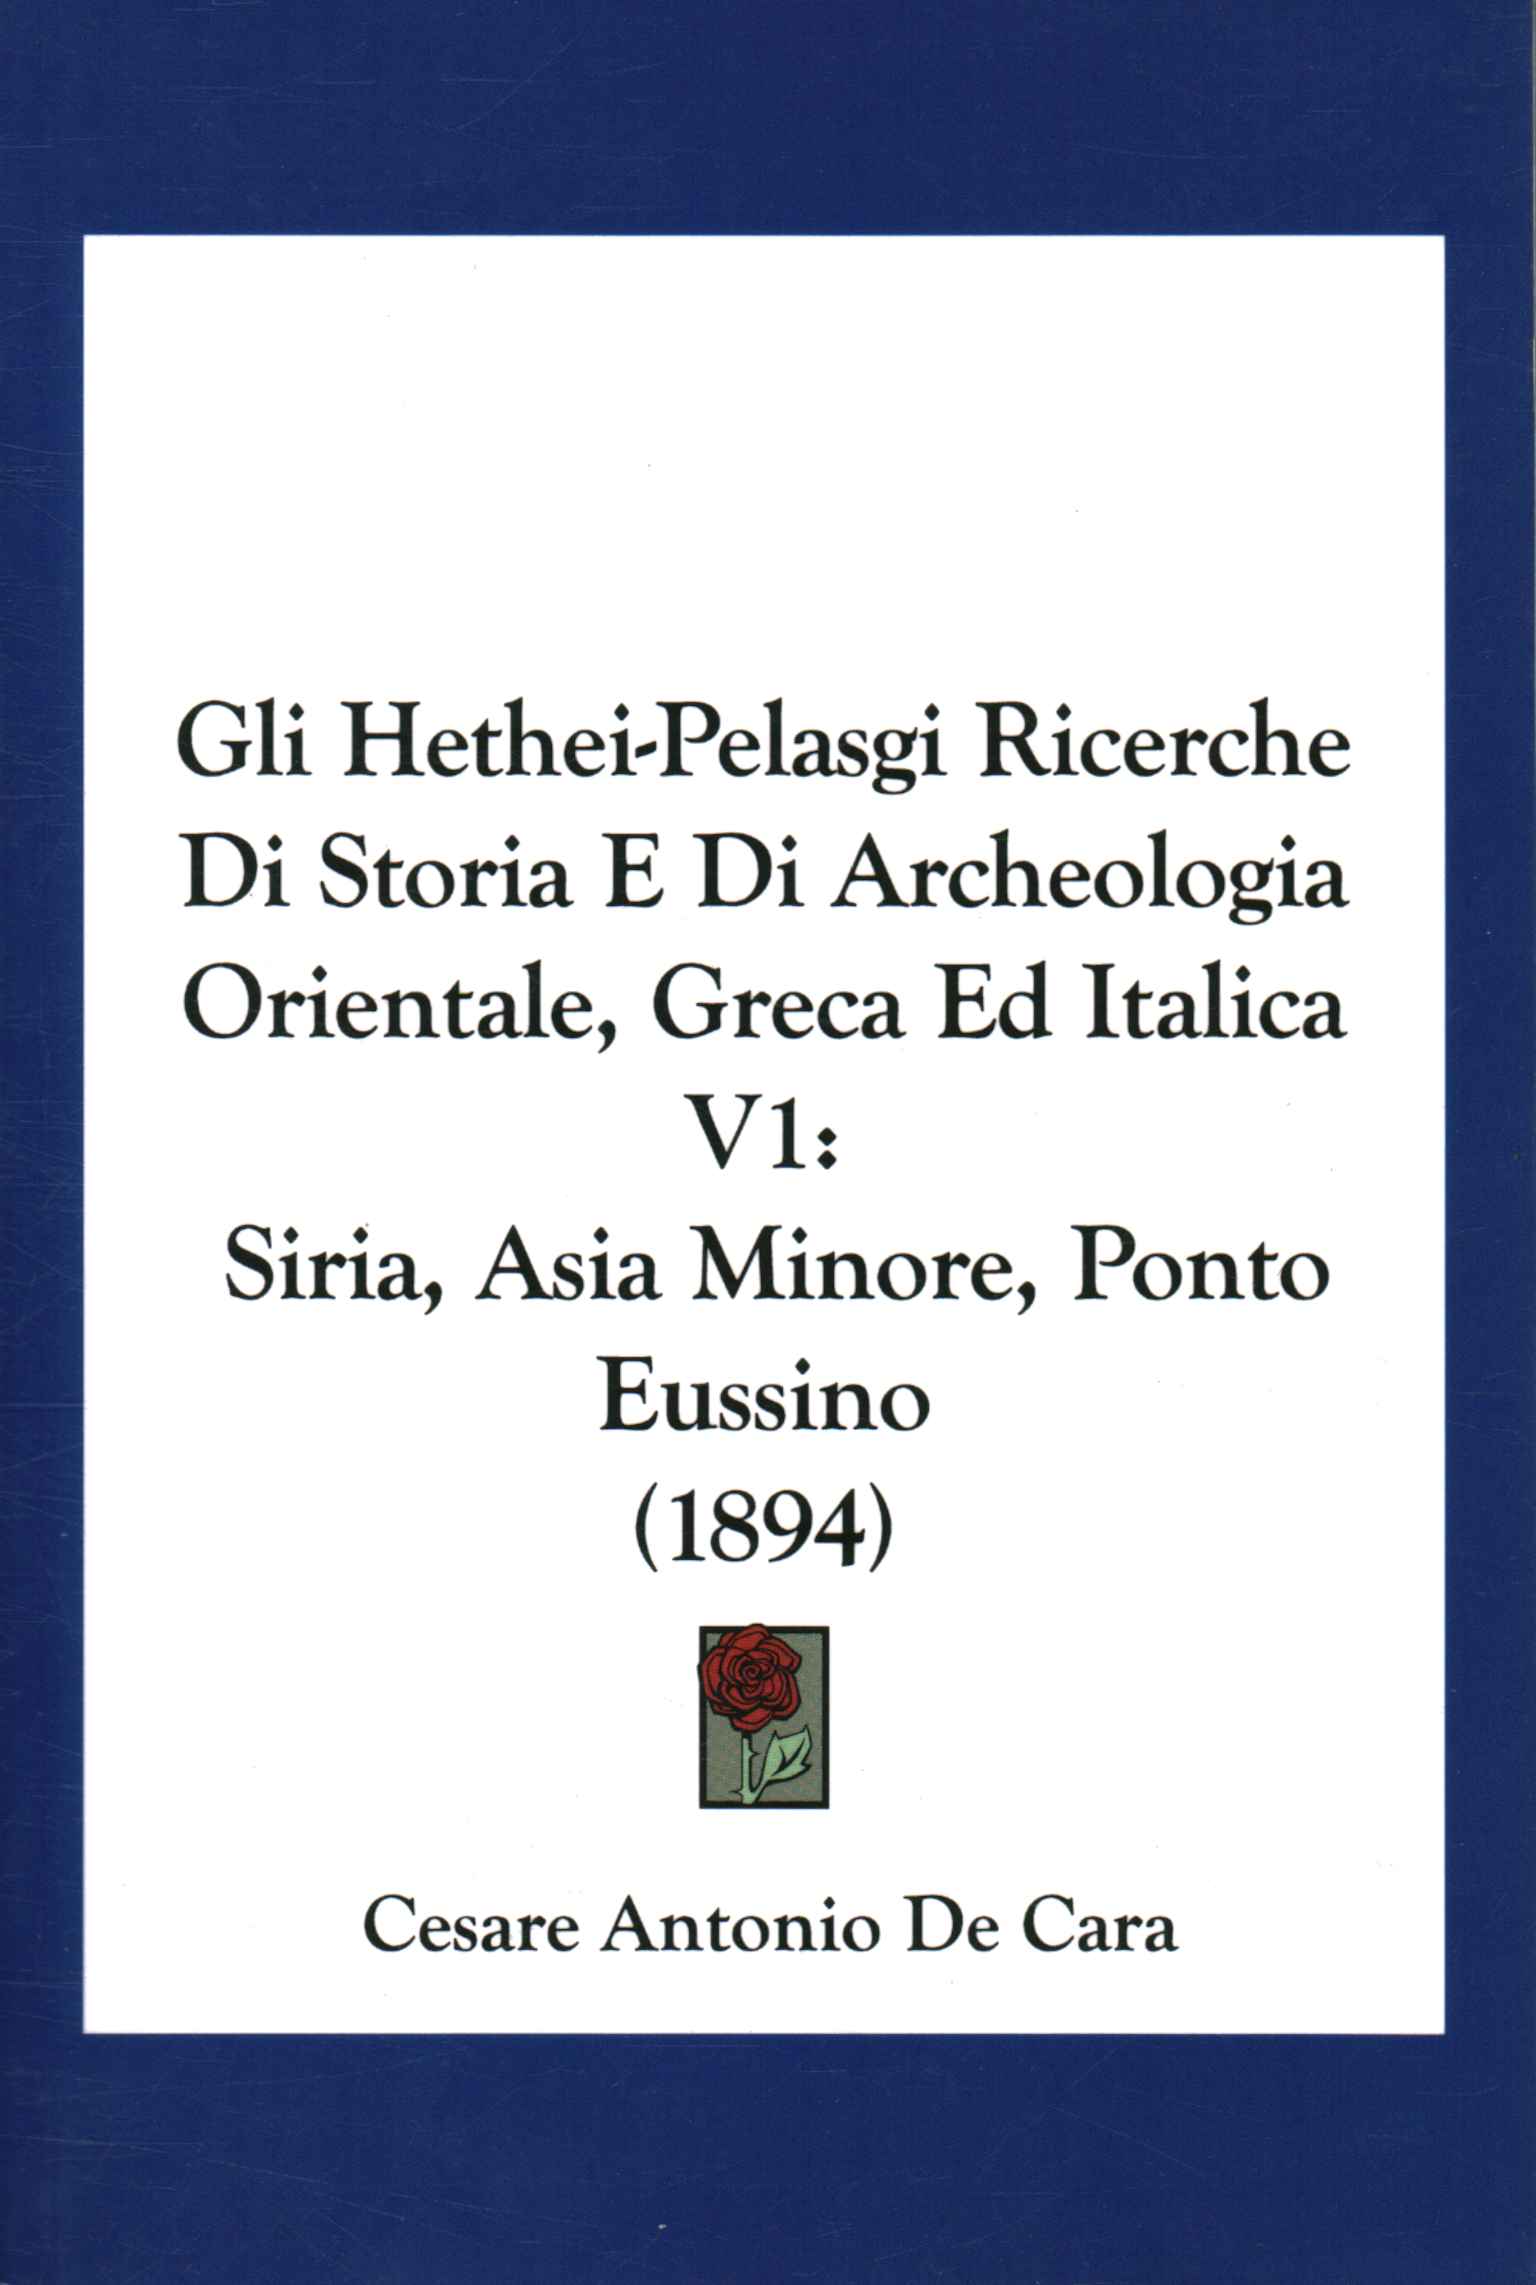 Gli Hethei-Pelasgi: ricerche di storia e